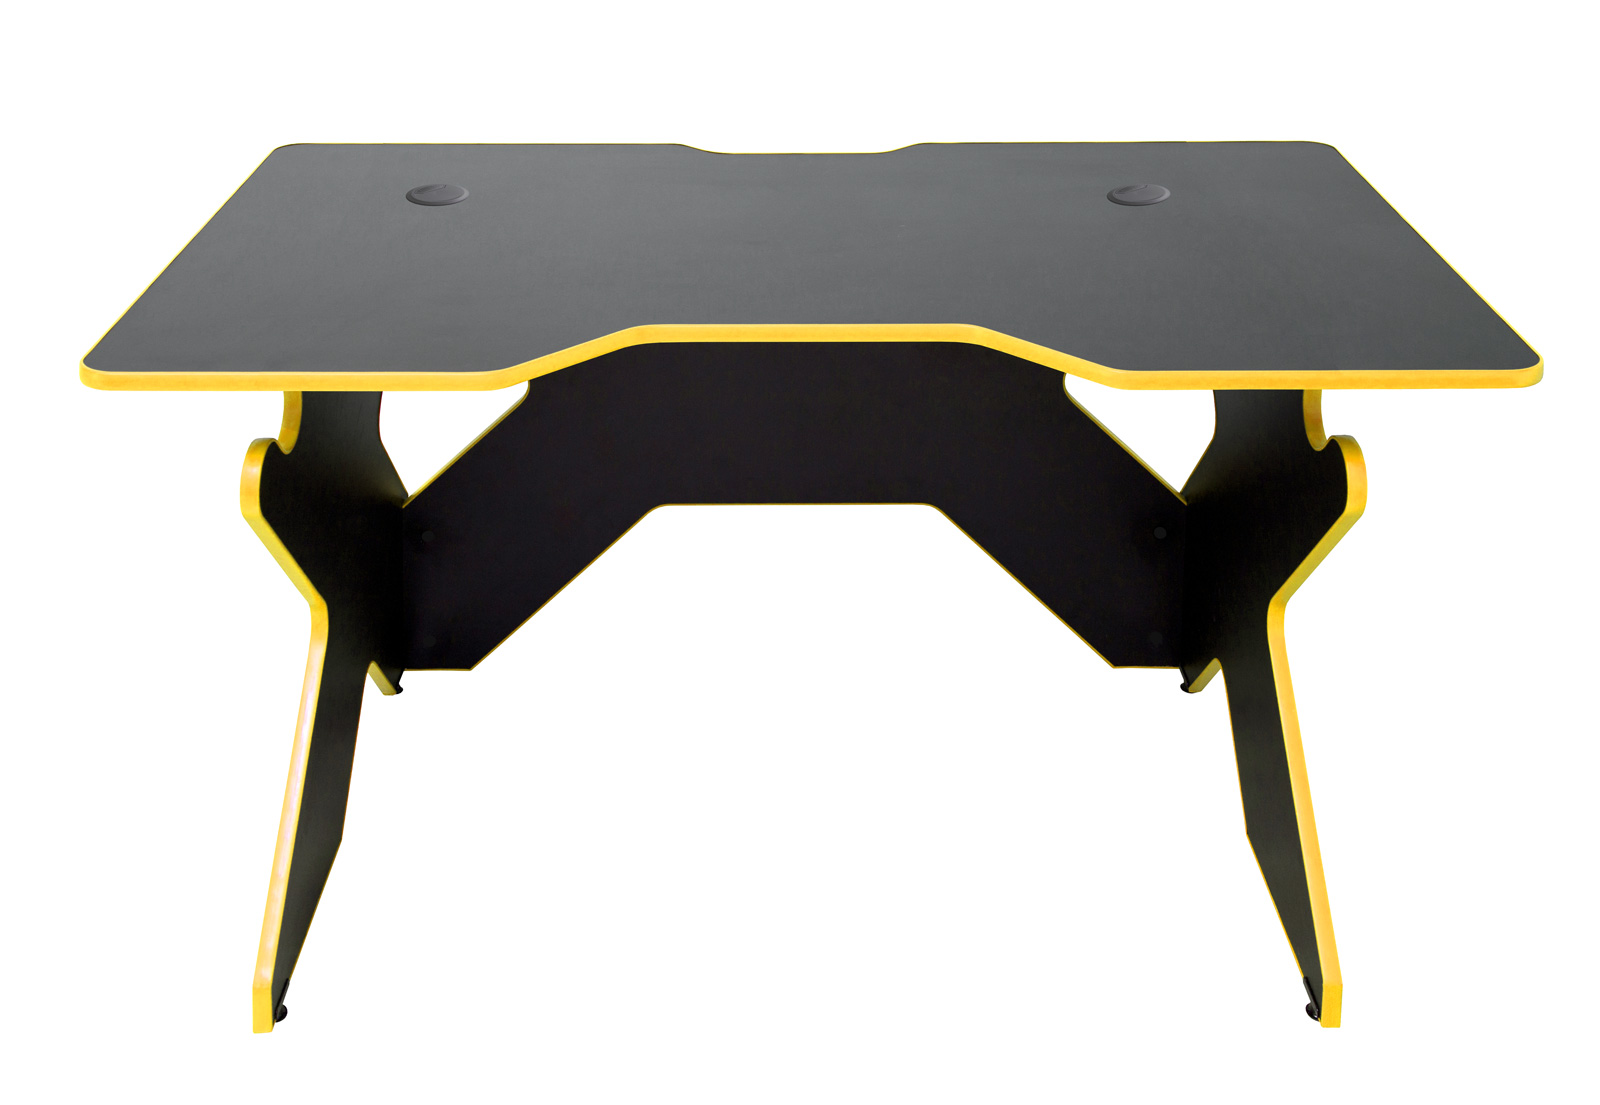 Игровой компьютерный стол vmmgame space dark 140 yellow st-3byw